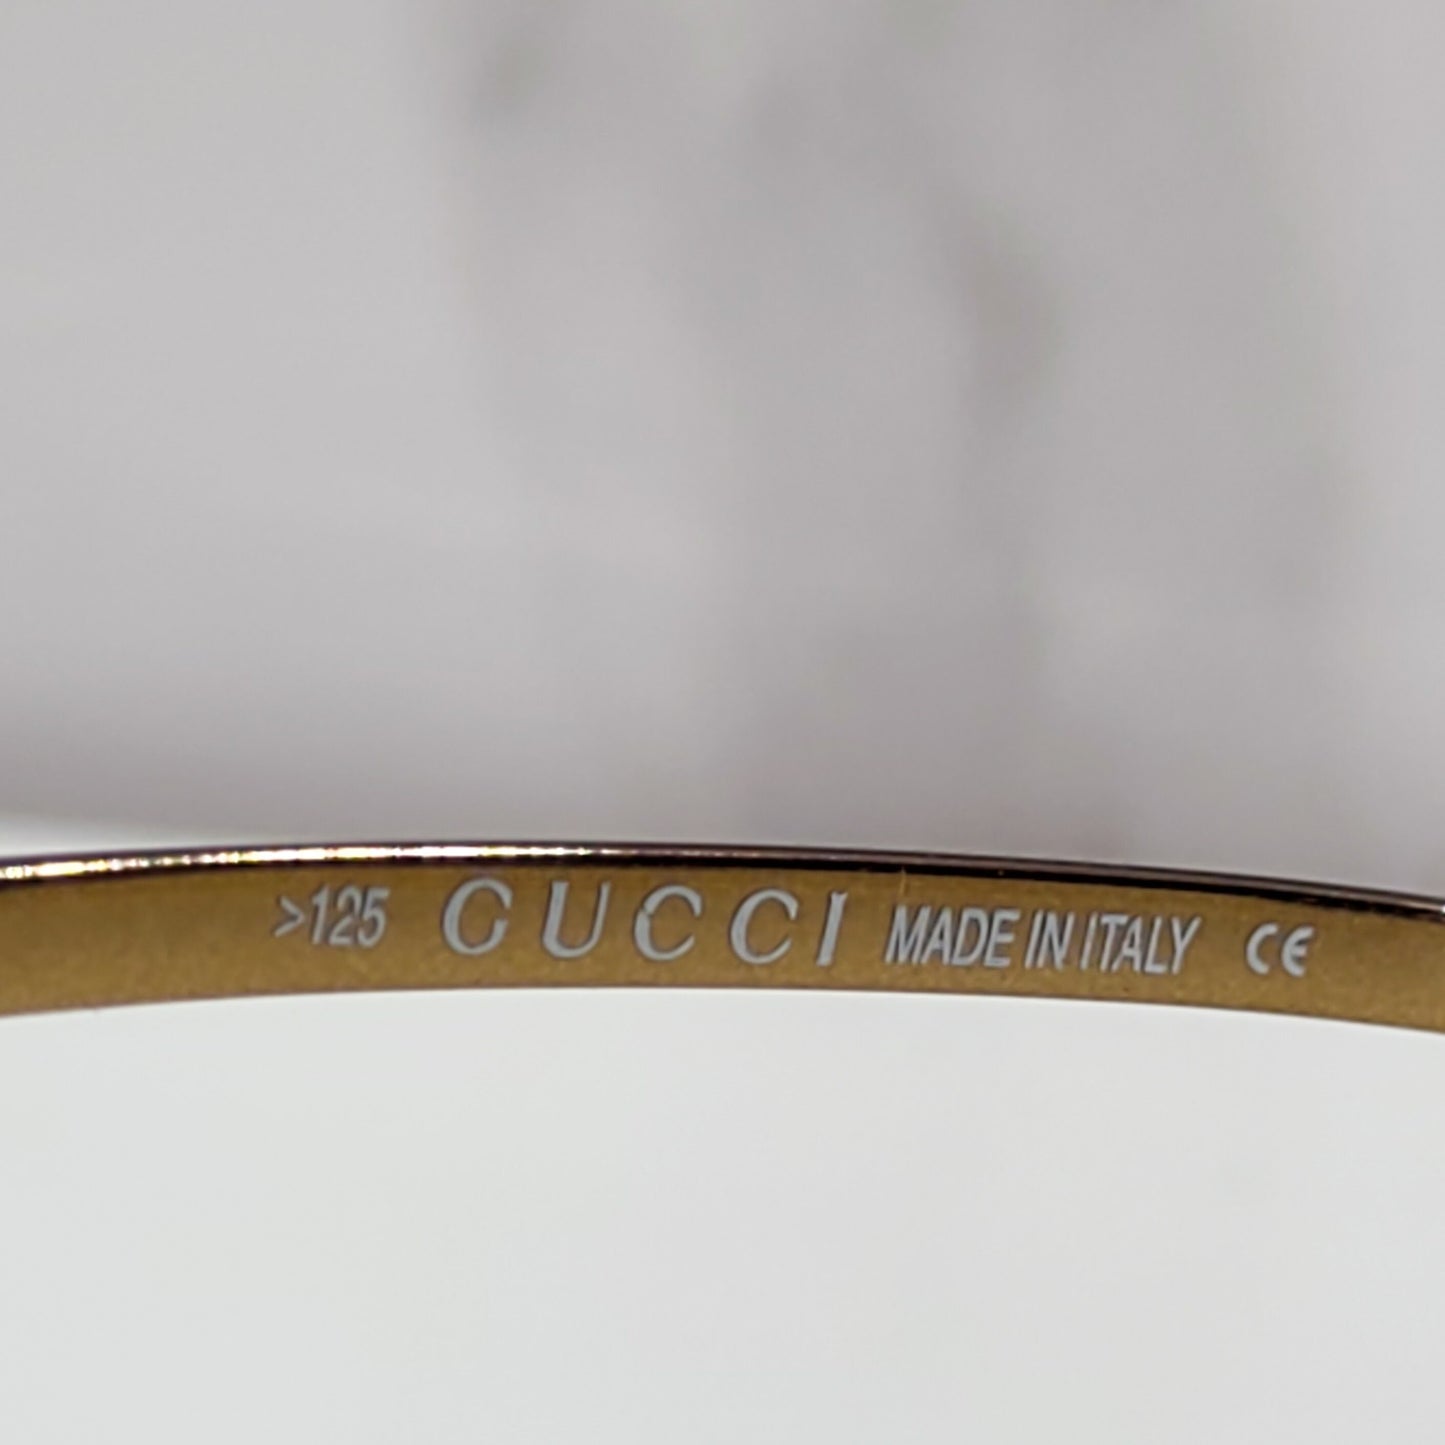 Gucci Tom Ford GG 1692 vintage green rimless sunglasses eyewear lunette brille y2k